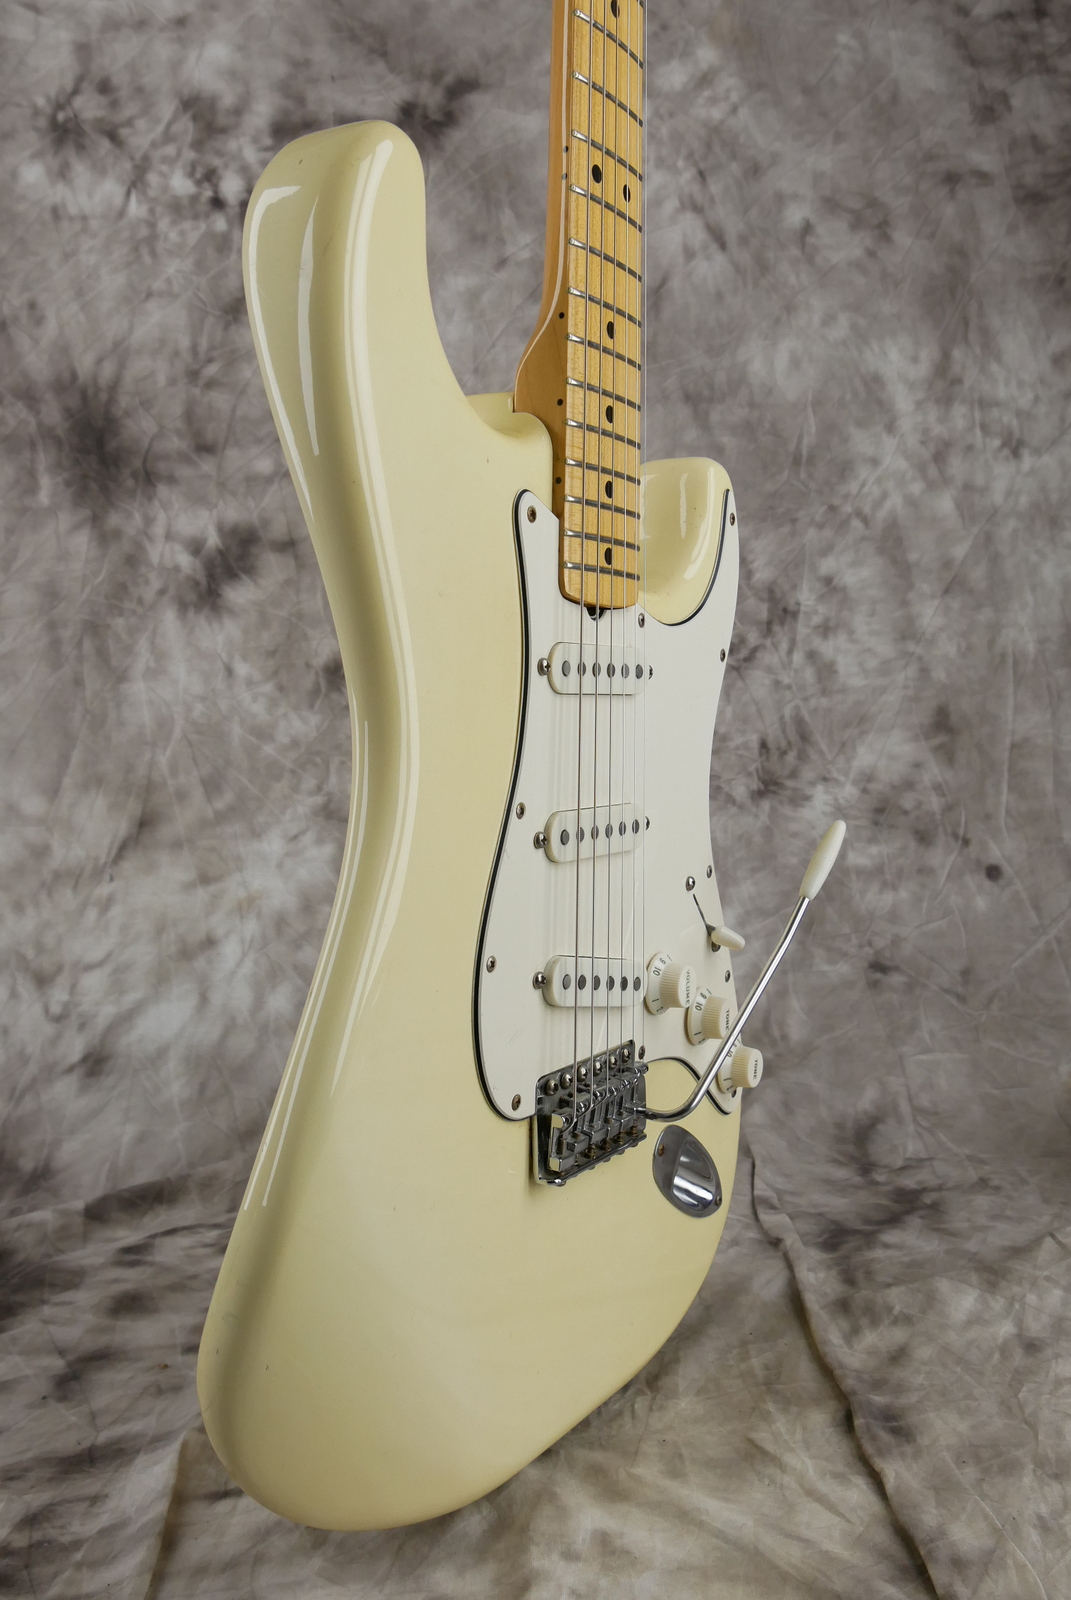 img/vintage/5303/Fender_Stratocaster_Dan_smith_1982_tremolo_hardcase-005.JPG